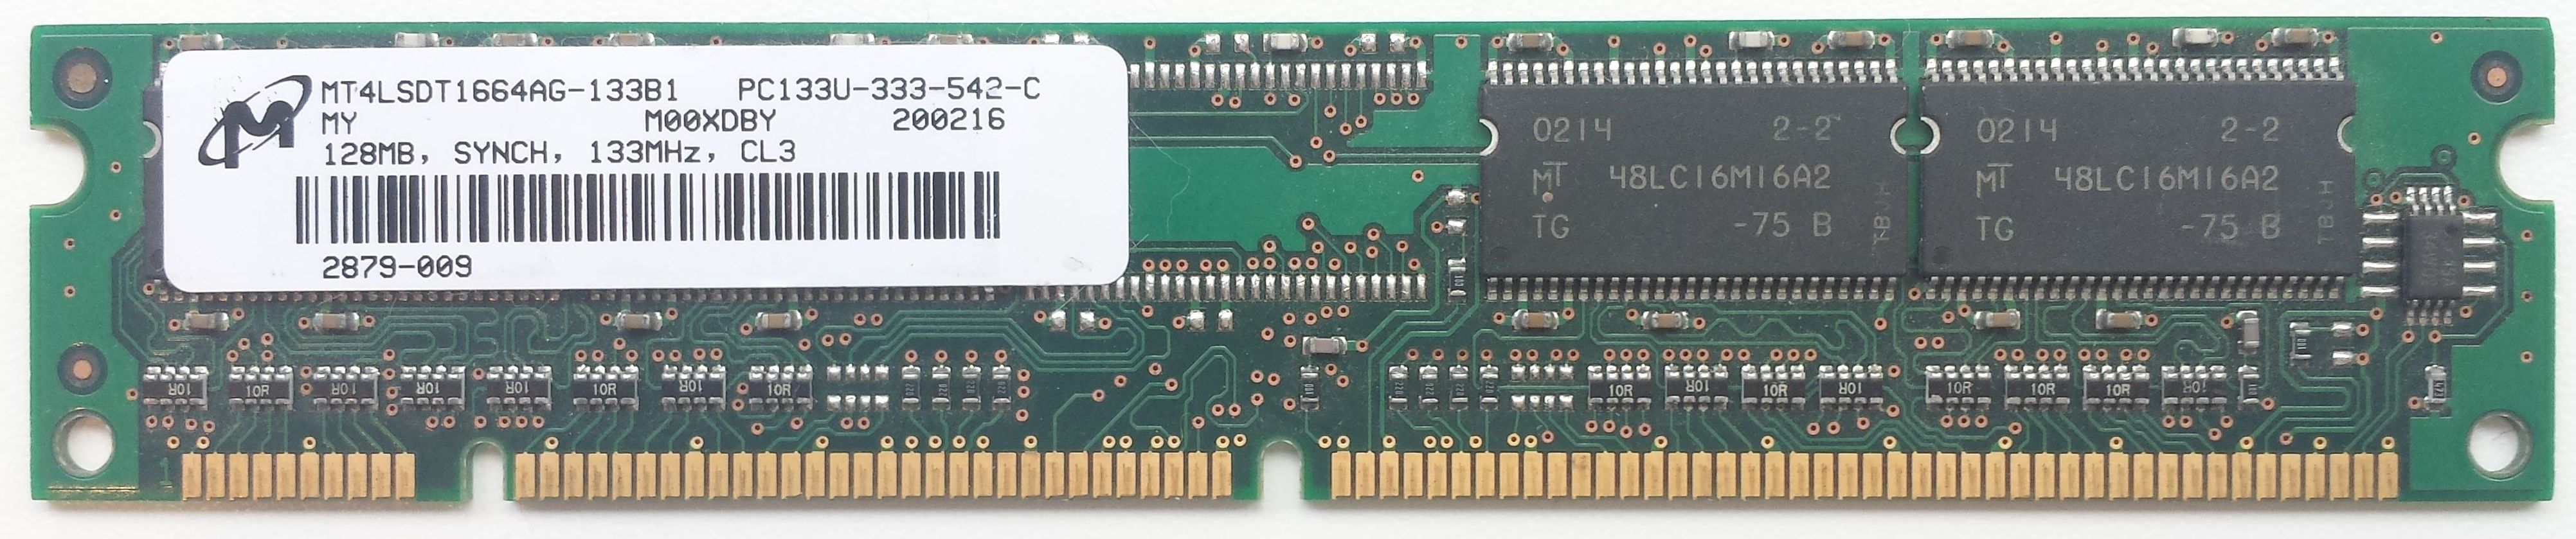 SDRAM 128MB 133Mhz / Micron MT4LSDT1664AG-133B1